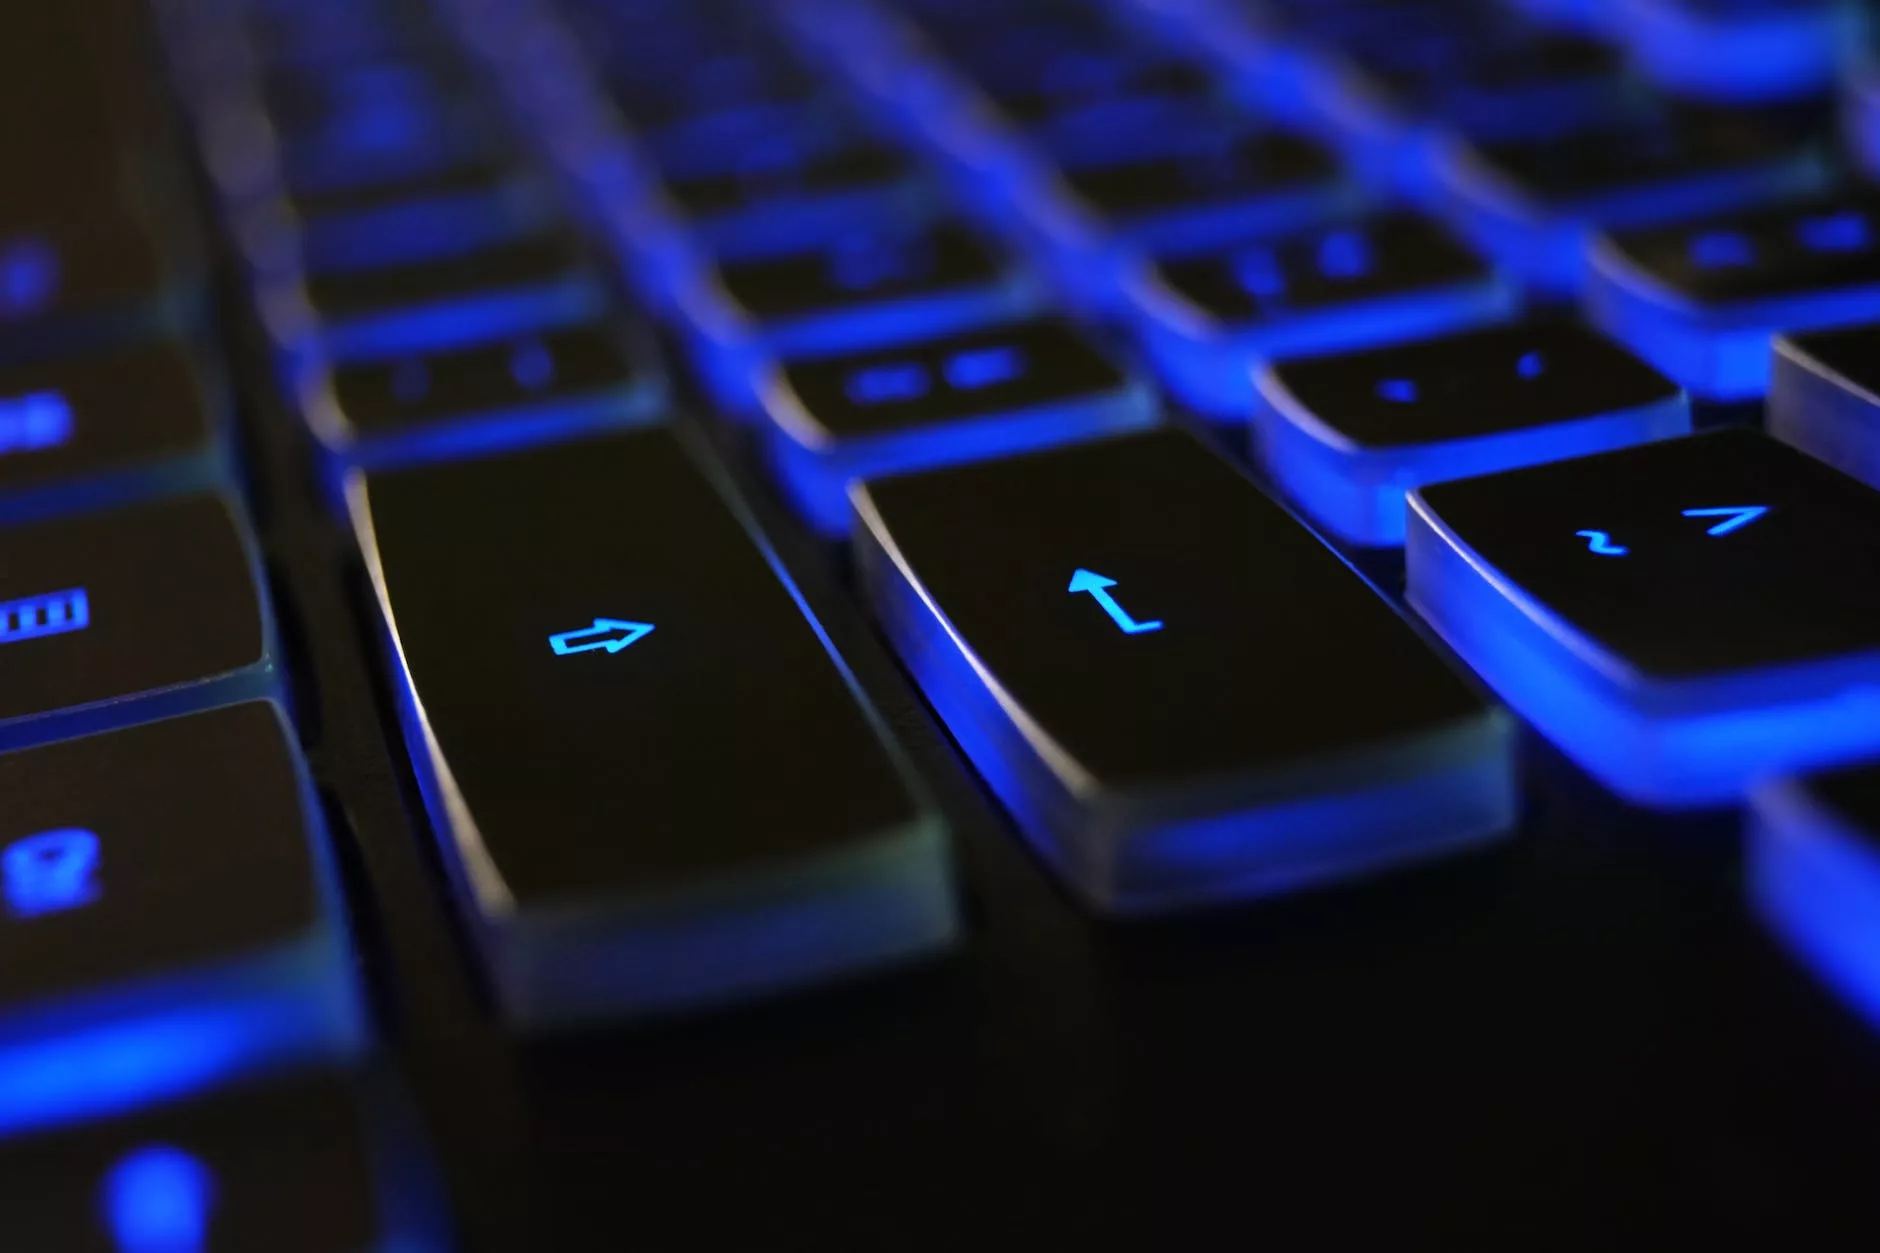 closeup photo of black and blue keyboard